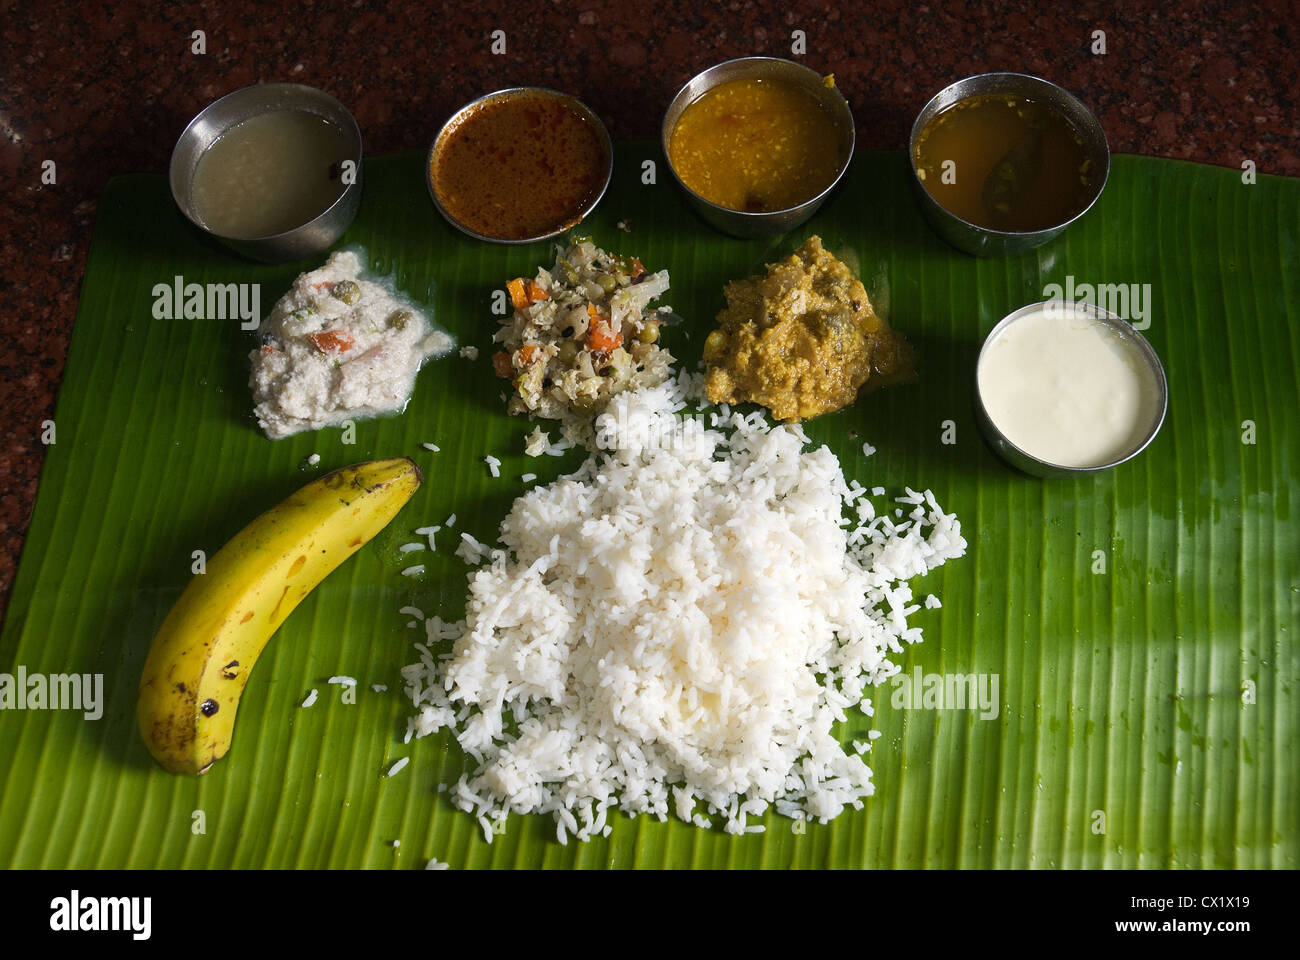 Elk201-4087 India, Tamil Nadu, Chennai, S India thali meal served on banana leaf Stock Photo